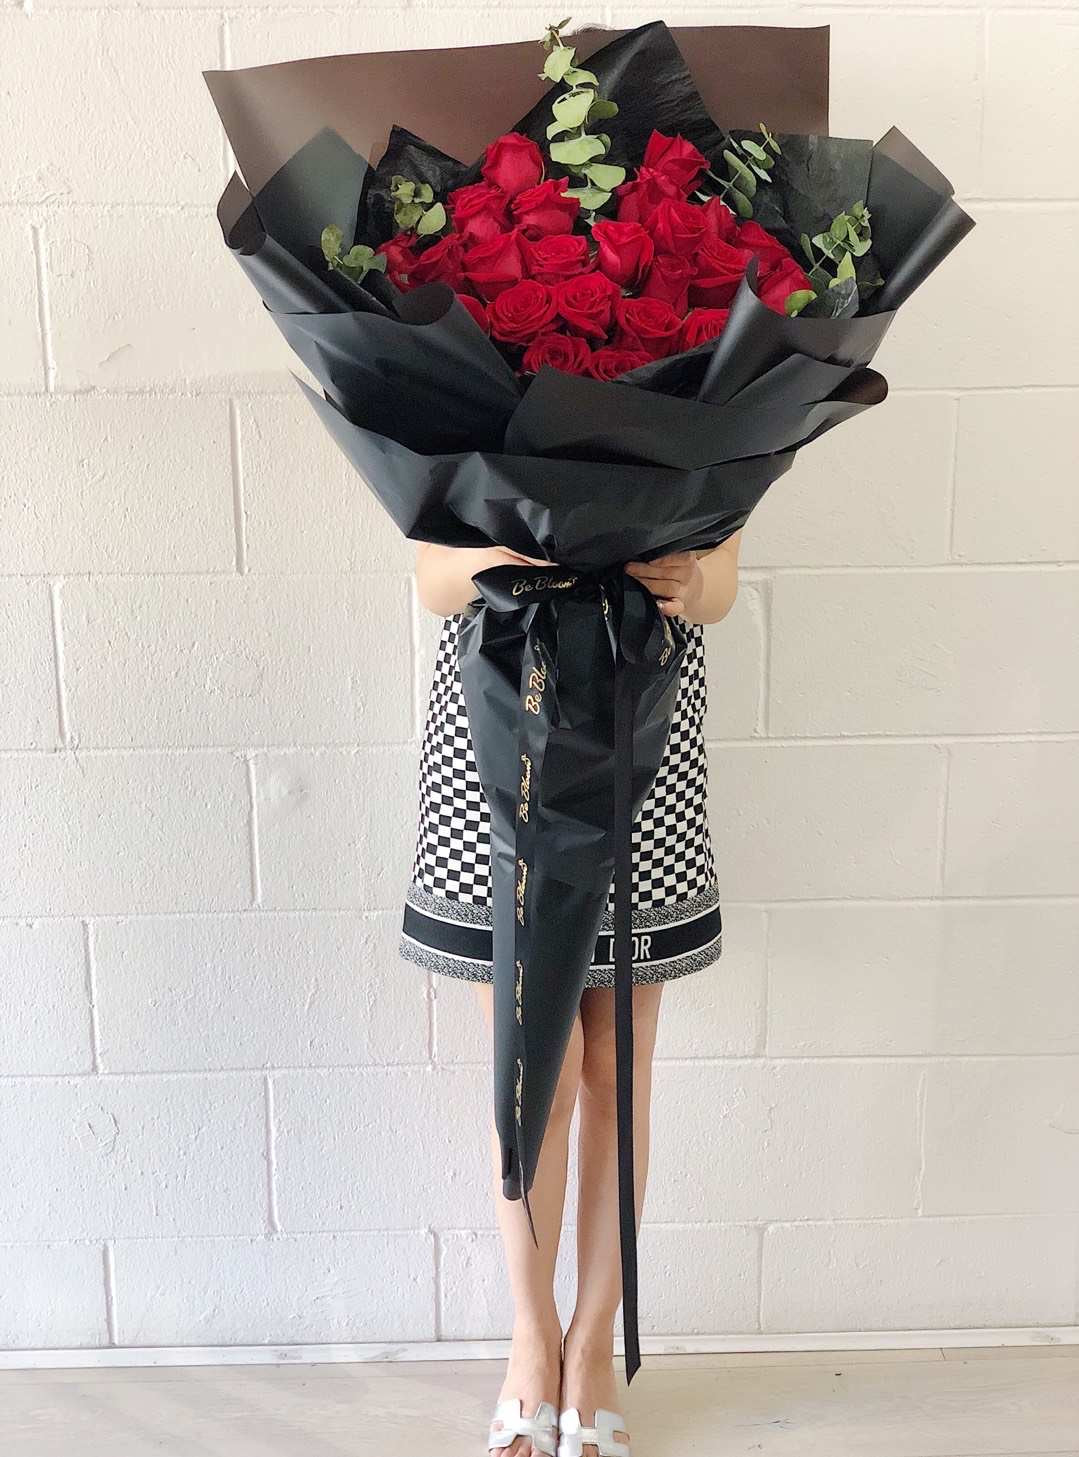 Huge Red Rose Bouquet